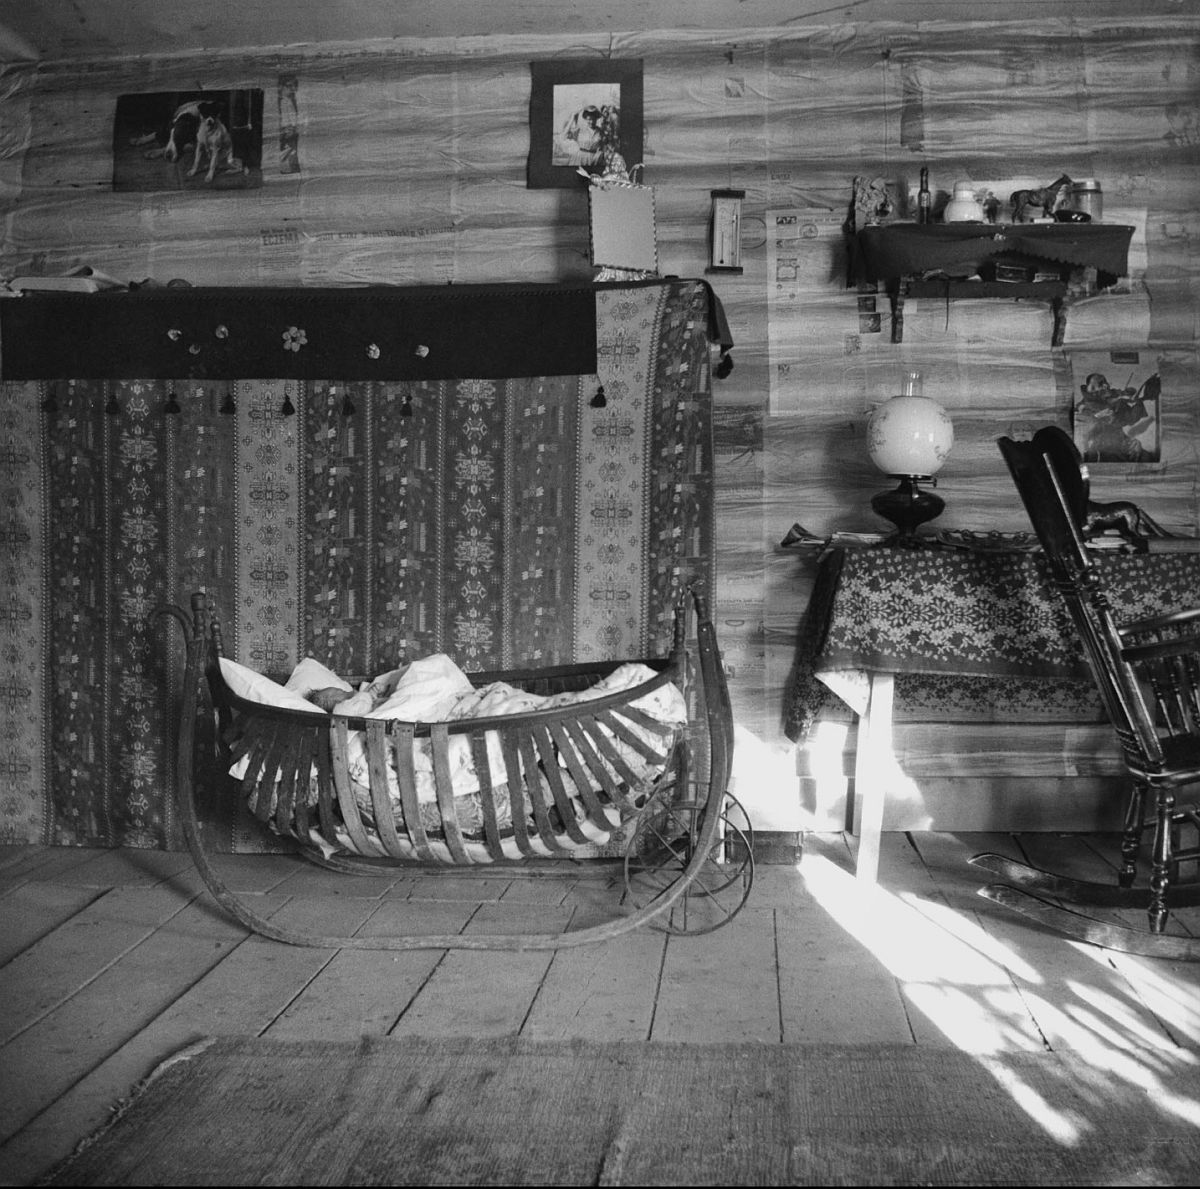 Lora Webb NicholsBert Oldman Jr. in Cradle at Willow Glen,
1903.